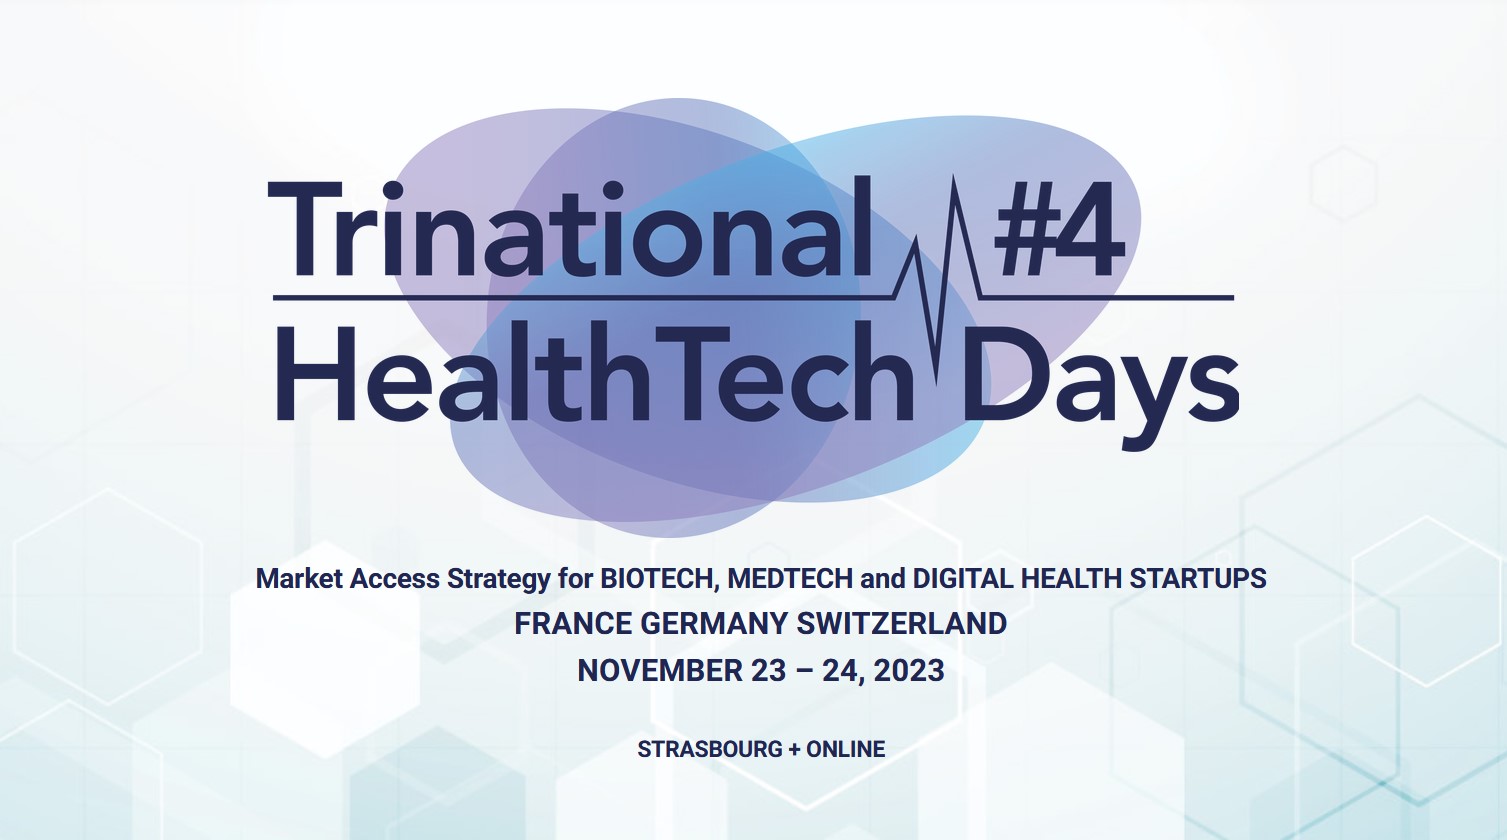 Trinational HealthTech days 2023